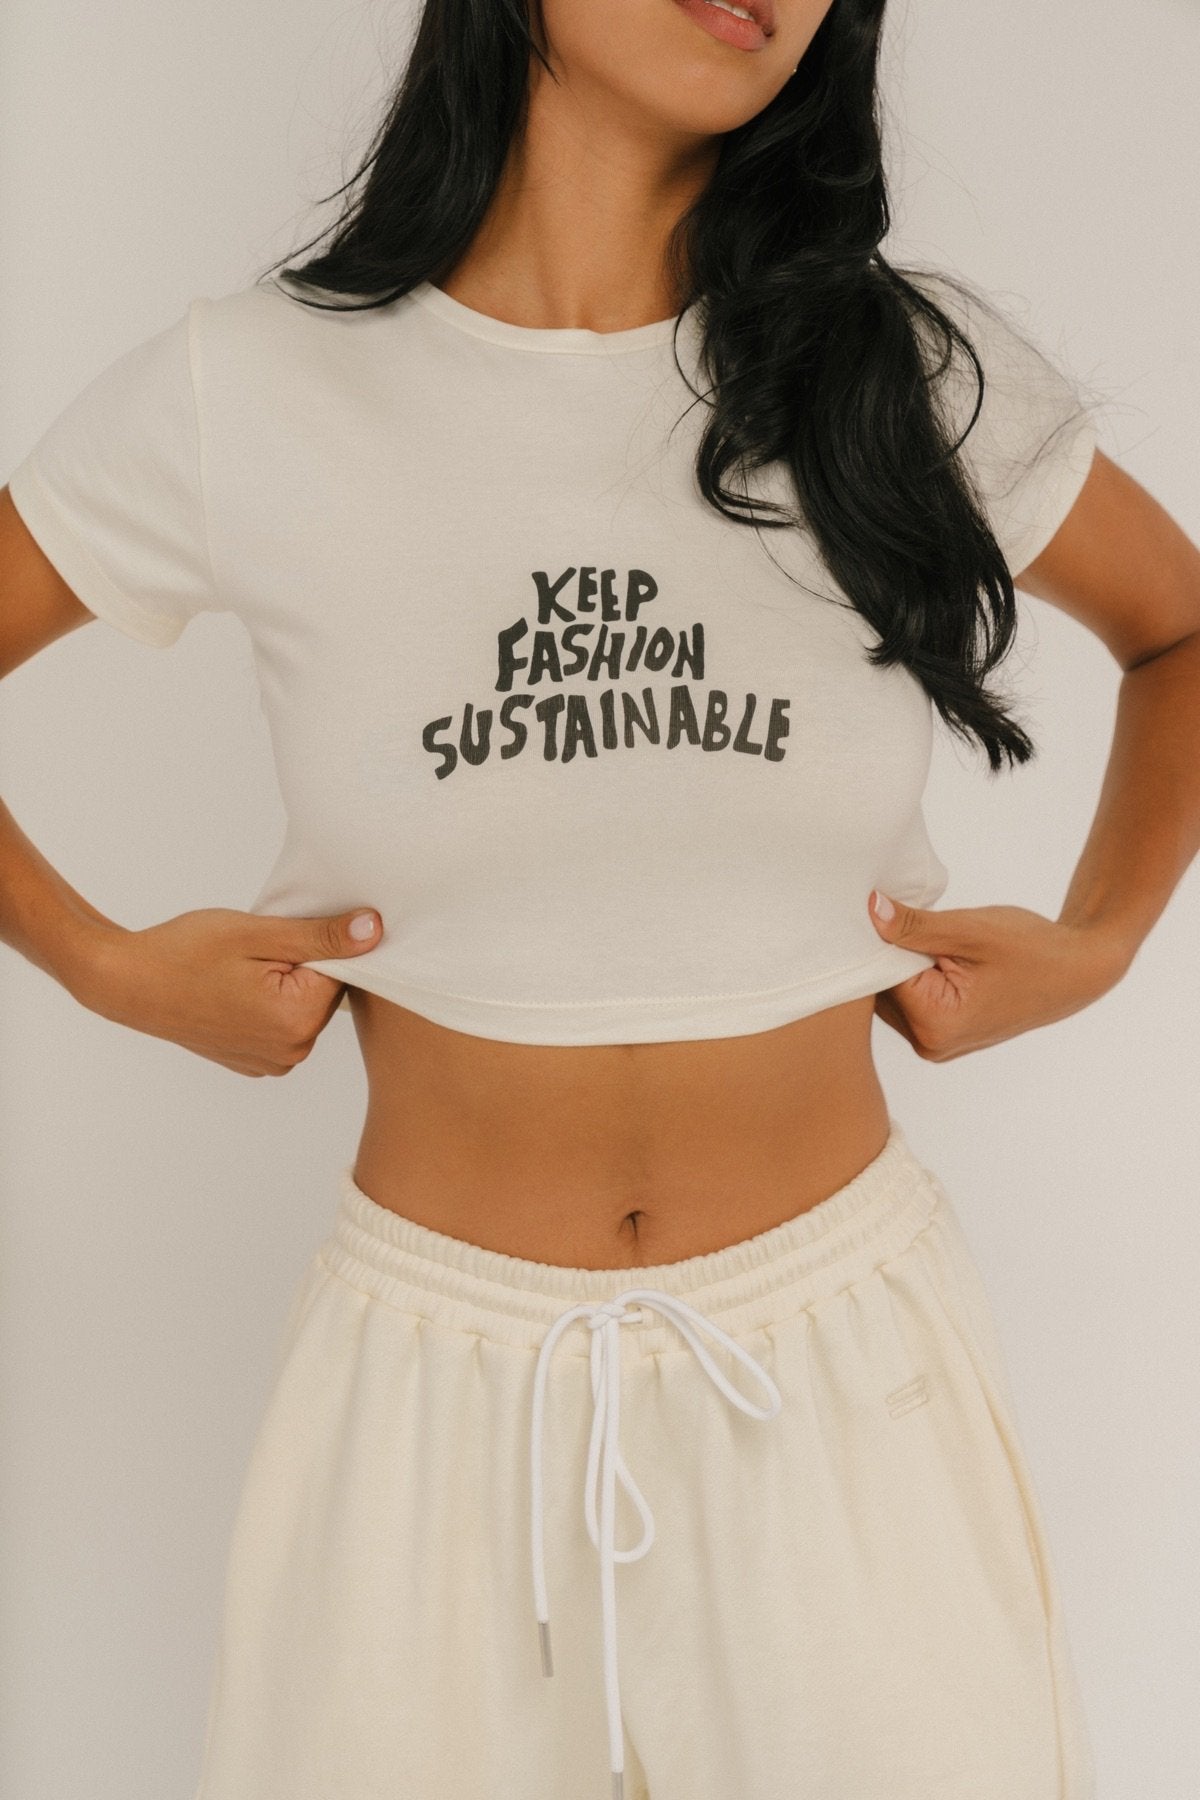 APPAREL - Keep Fashion Sustainable Baby Tee